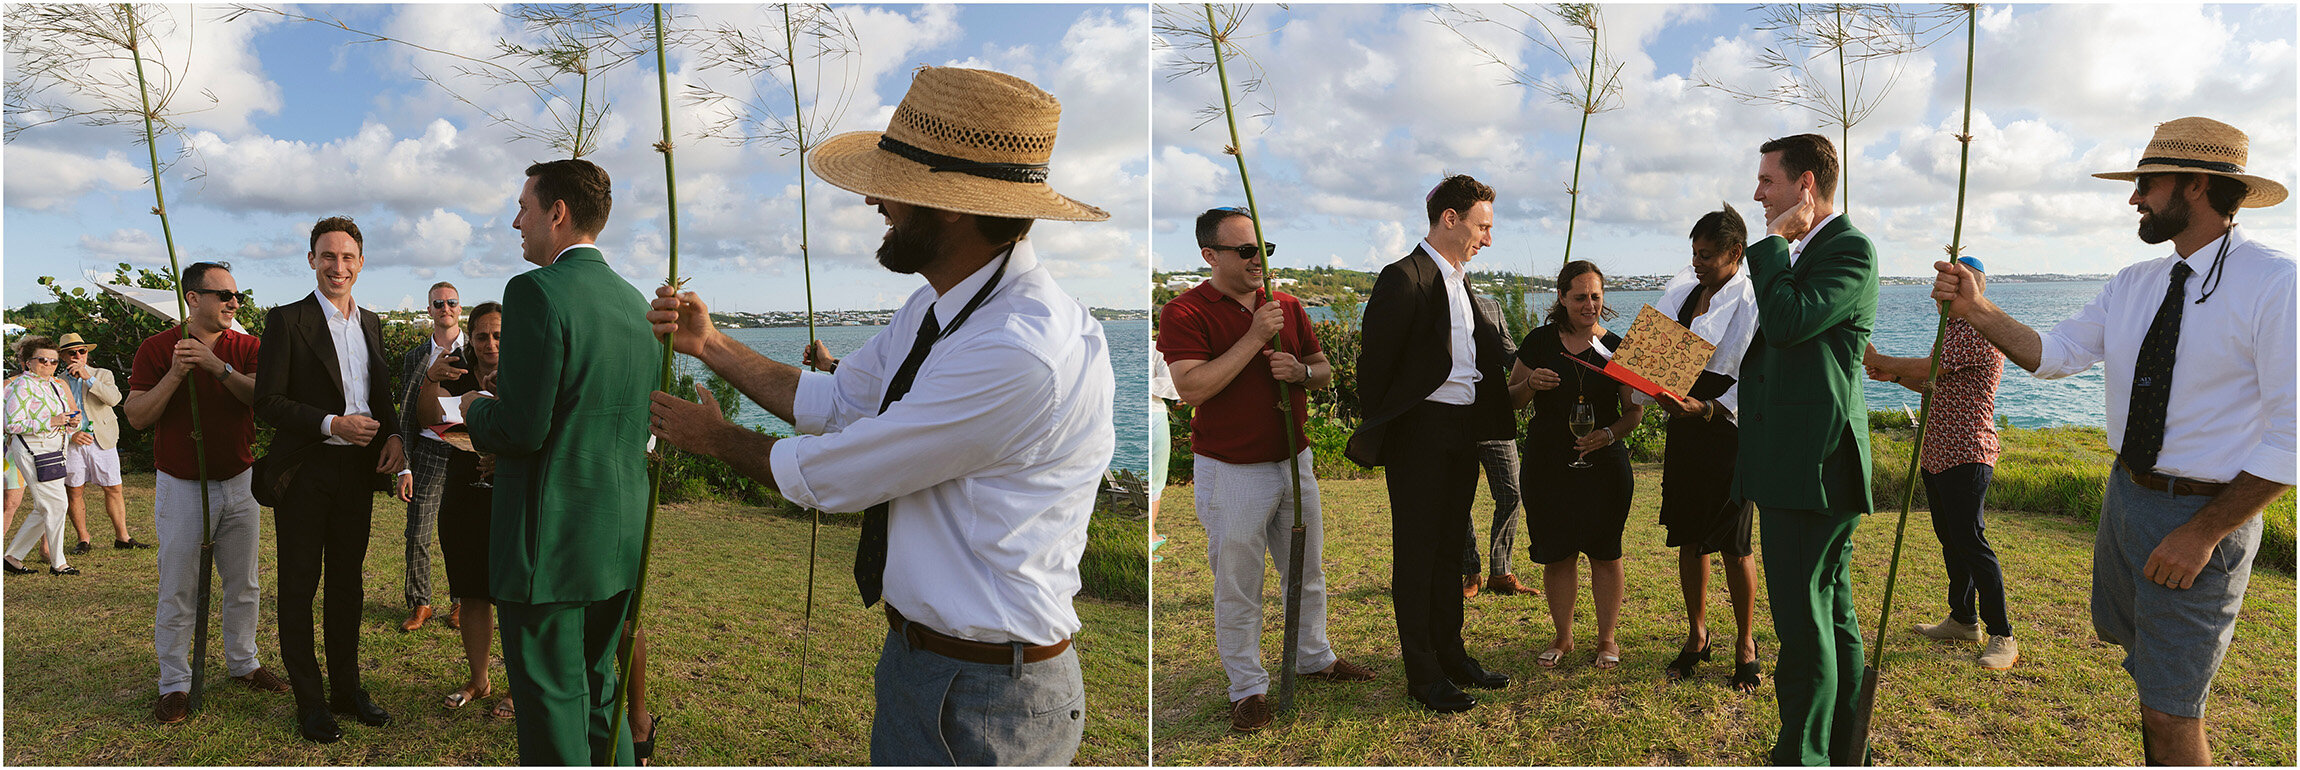 ©FianderFoto_Bermuda Same Sex Wedding Photographer_W&J_033.jpg